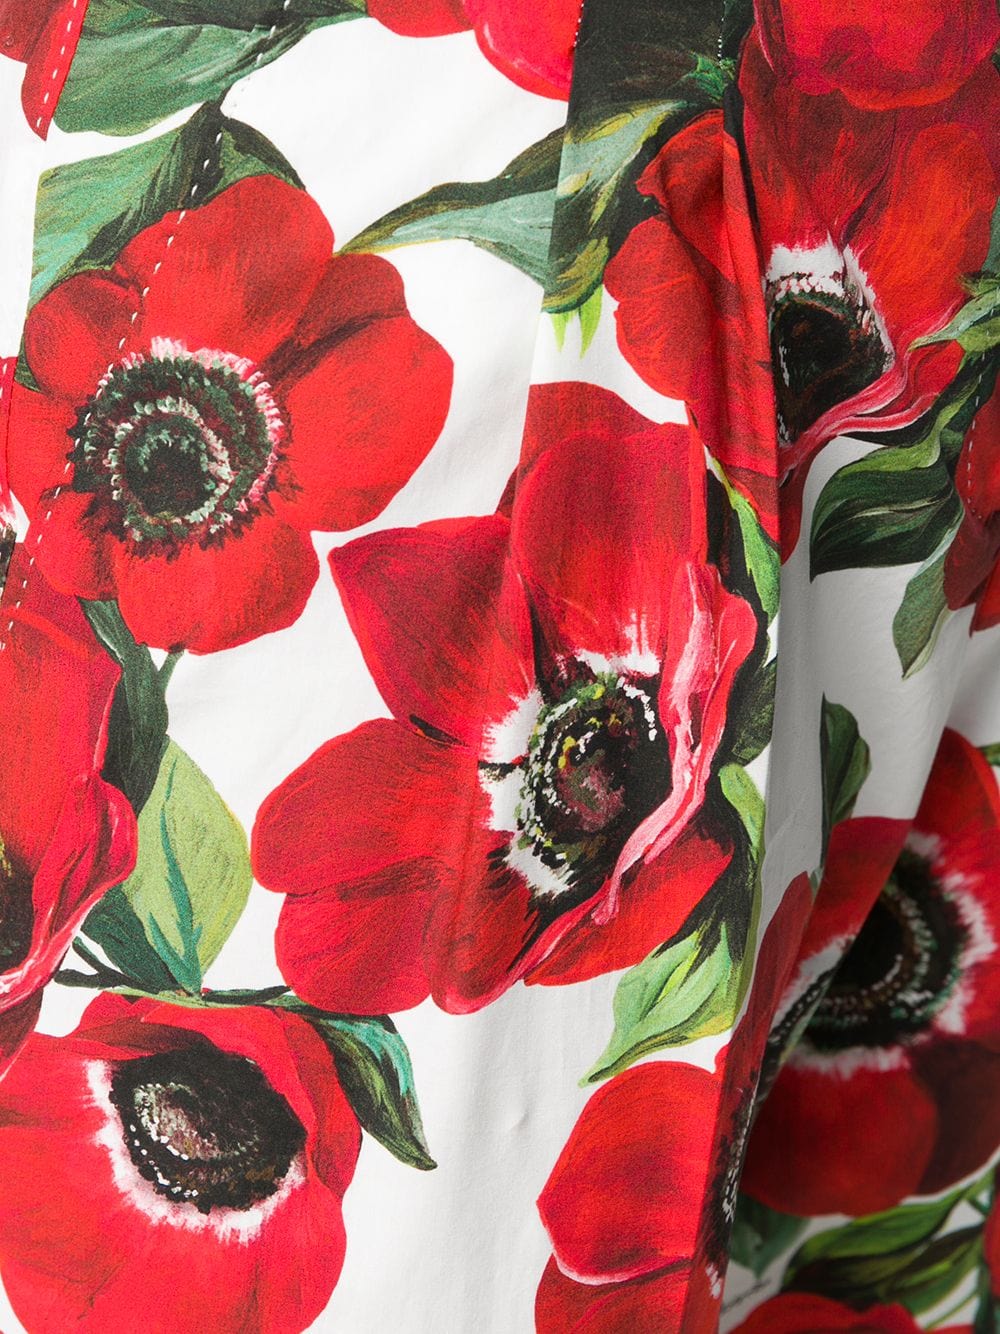 Dolce & Gabbana Floral-Print Trousers